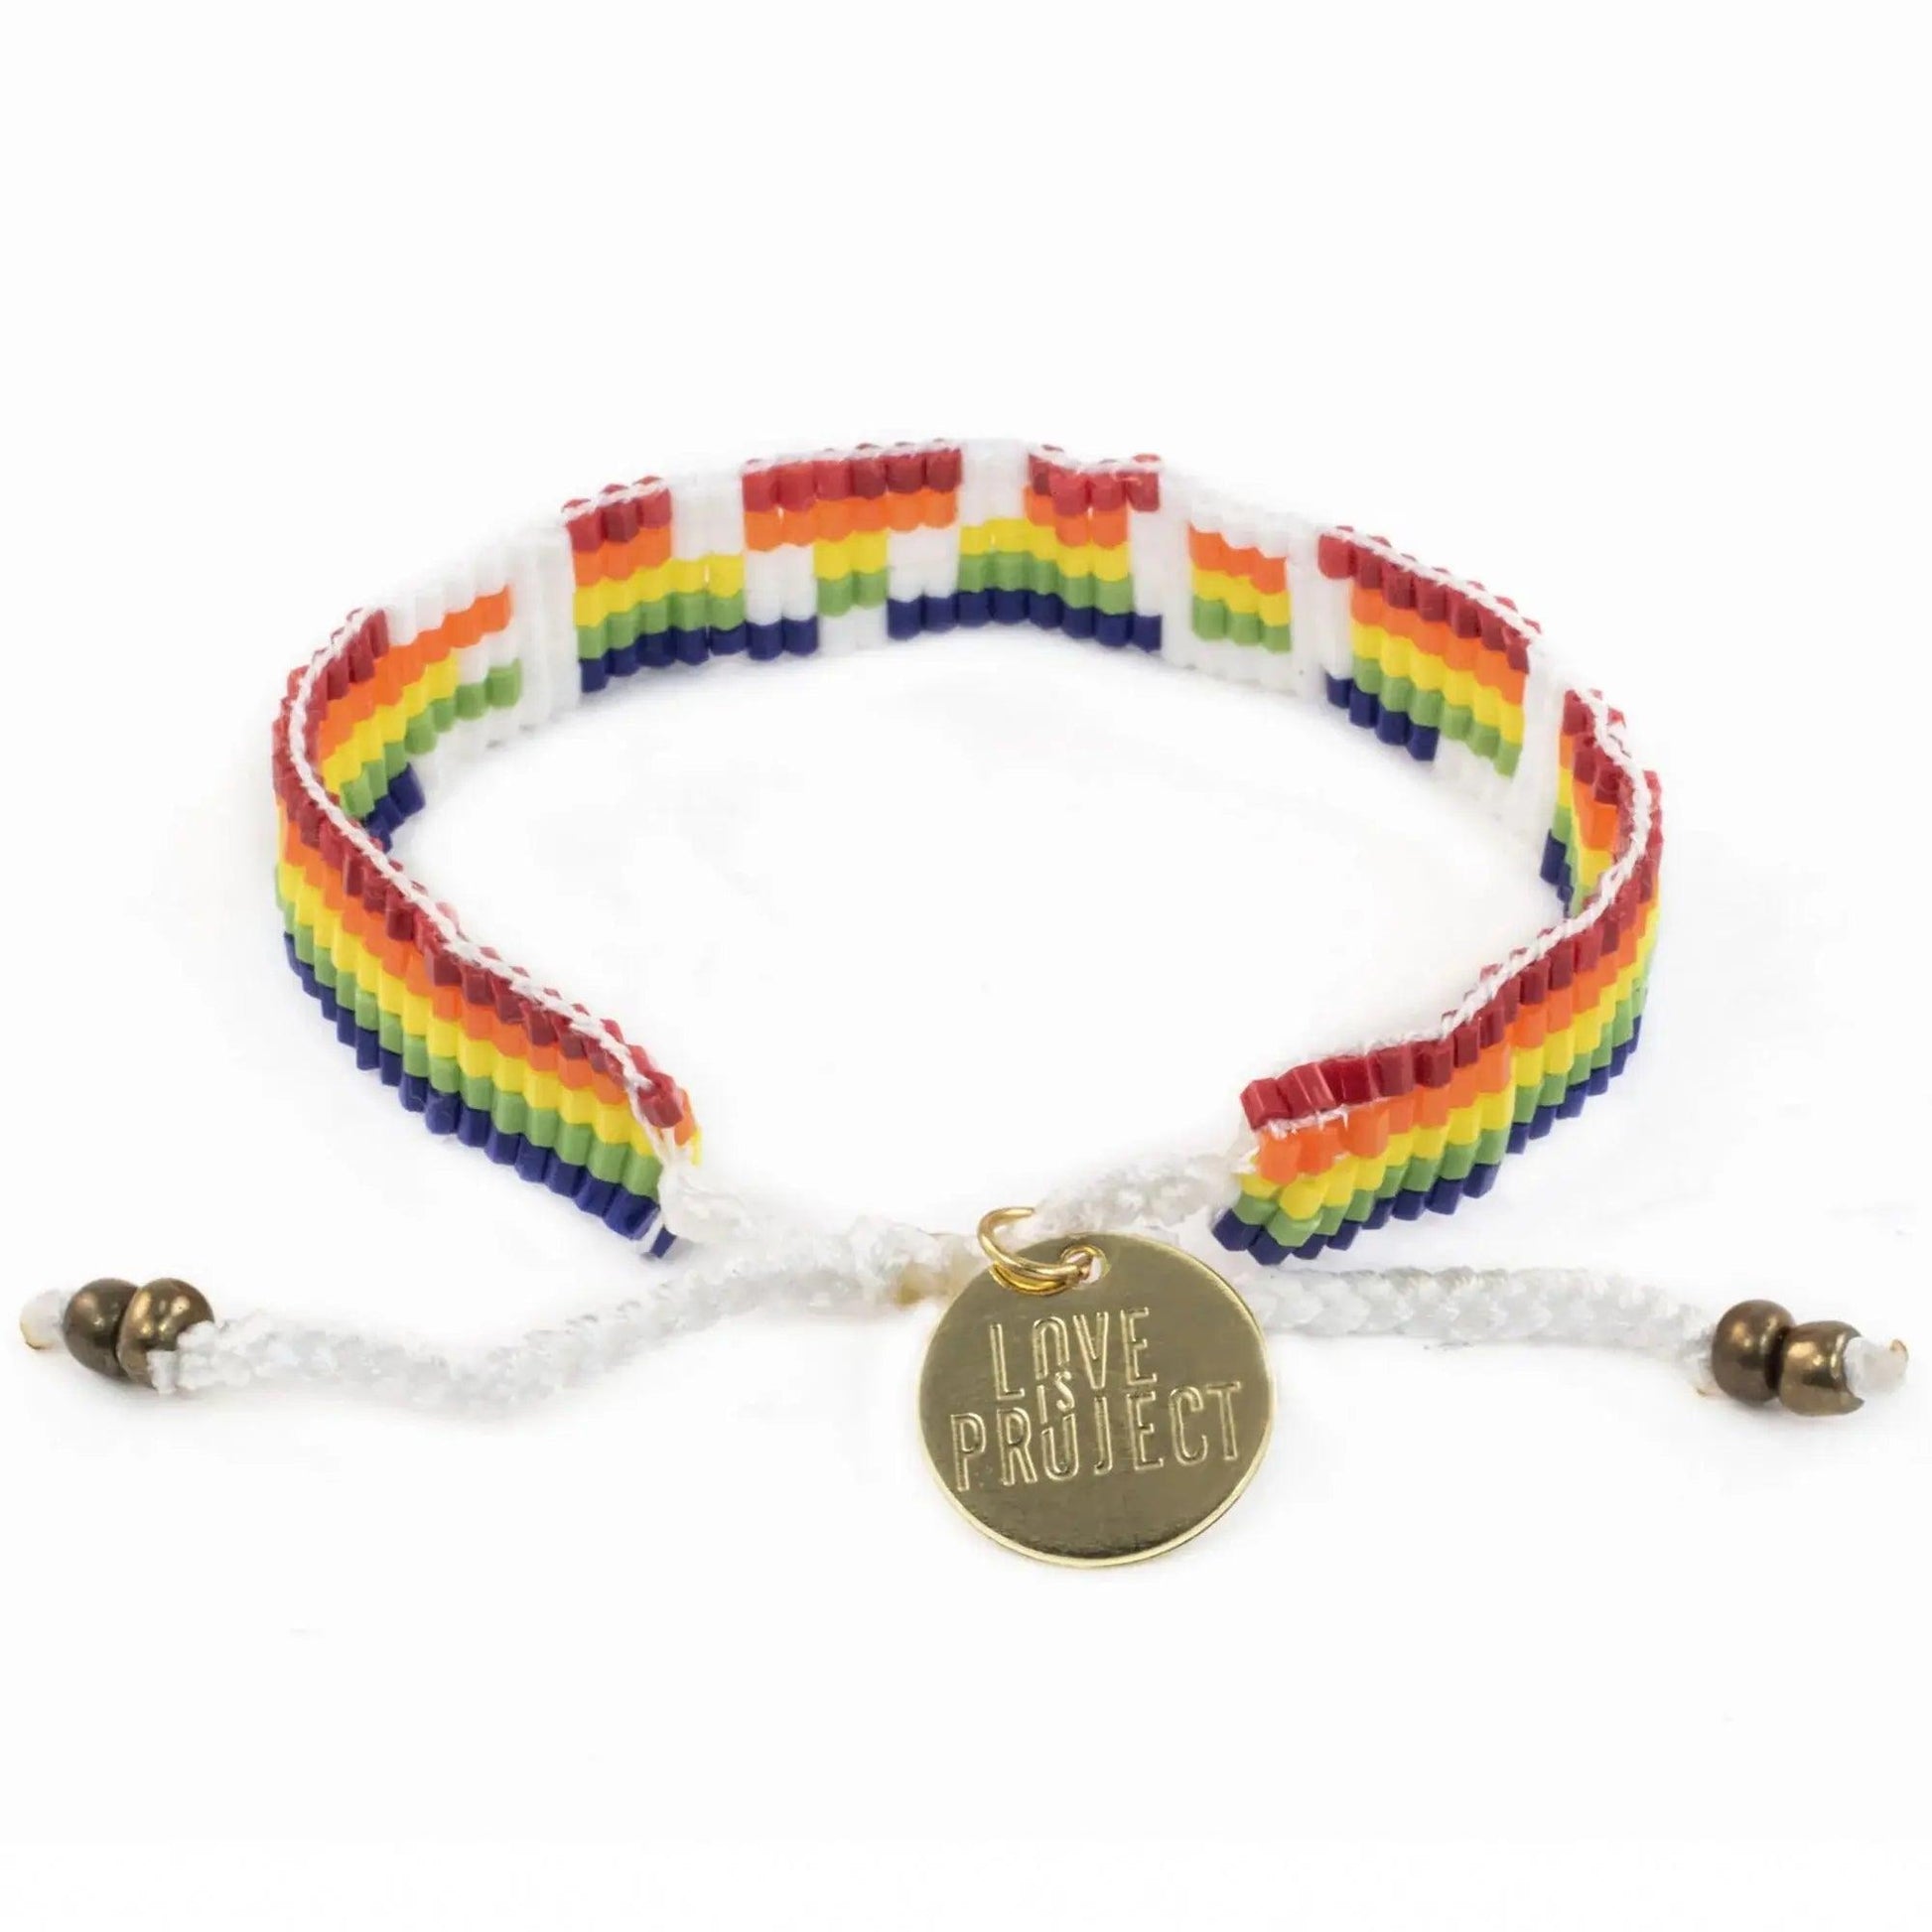 Love is Project:Bracelet,Rainbow LOVE